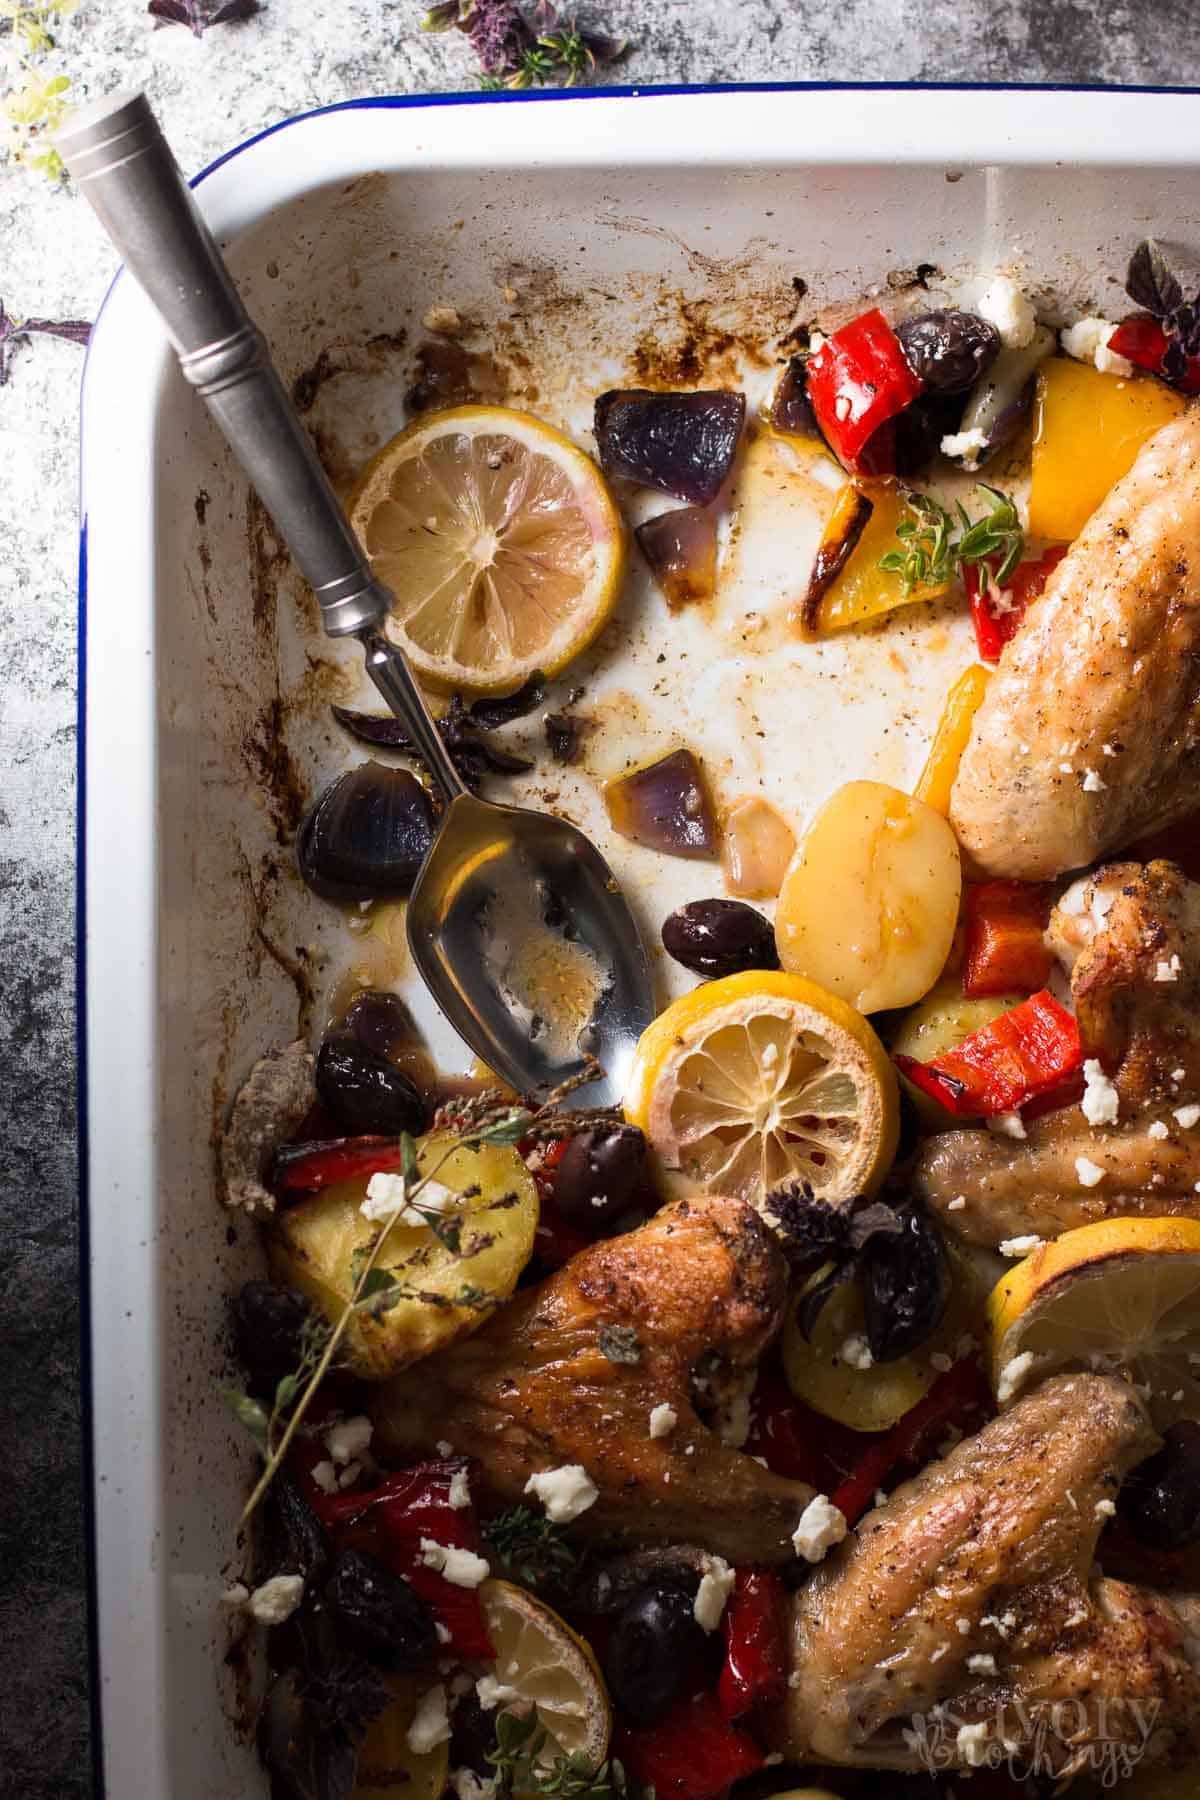 https://www.savorynothings.com/wp-content/uploads/2015/12/one-sheet-pan-greek-style-easy-baked-chicken-dinner-recipe-6.jpg